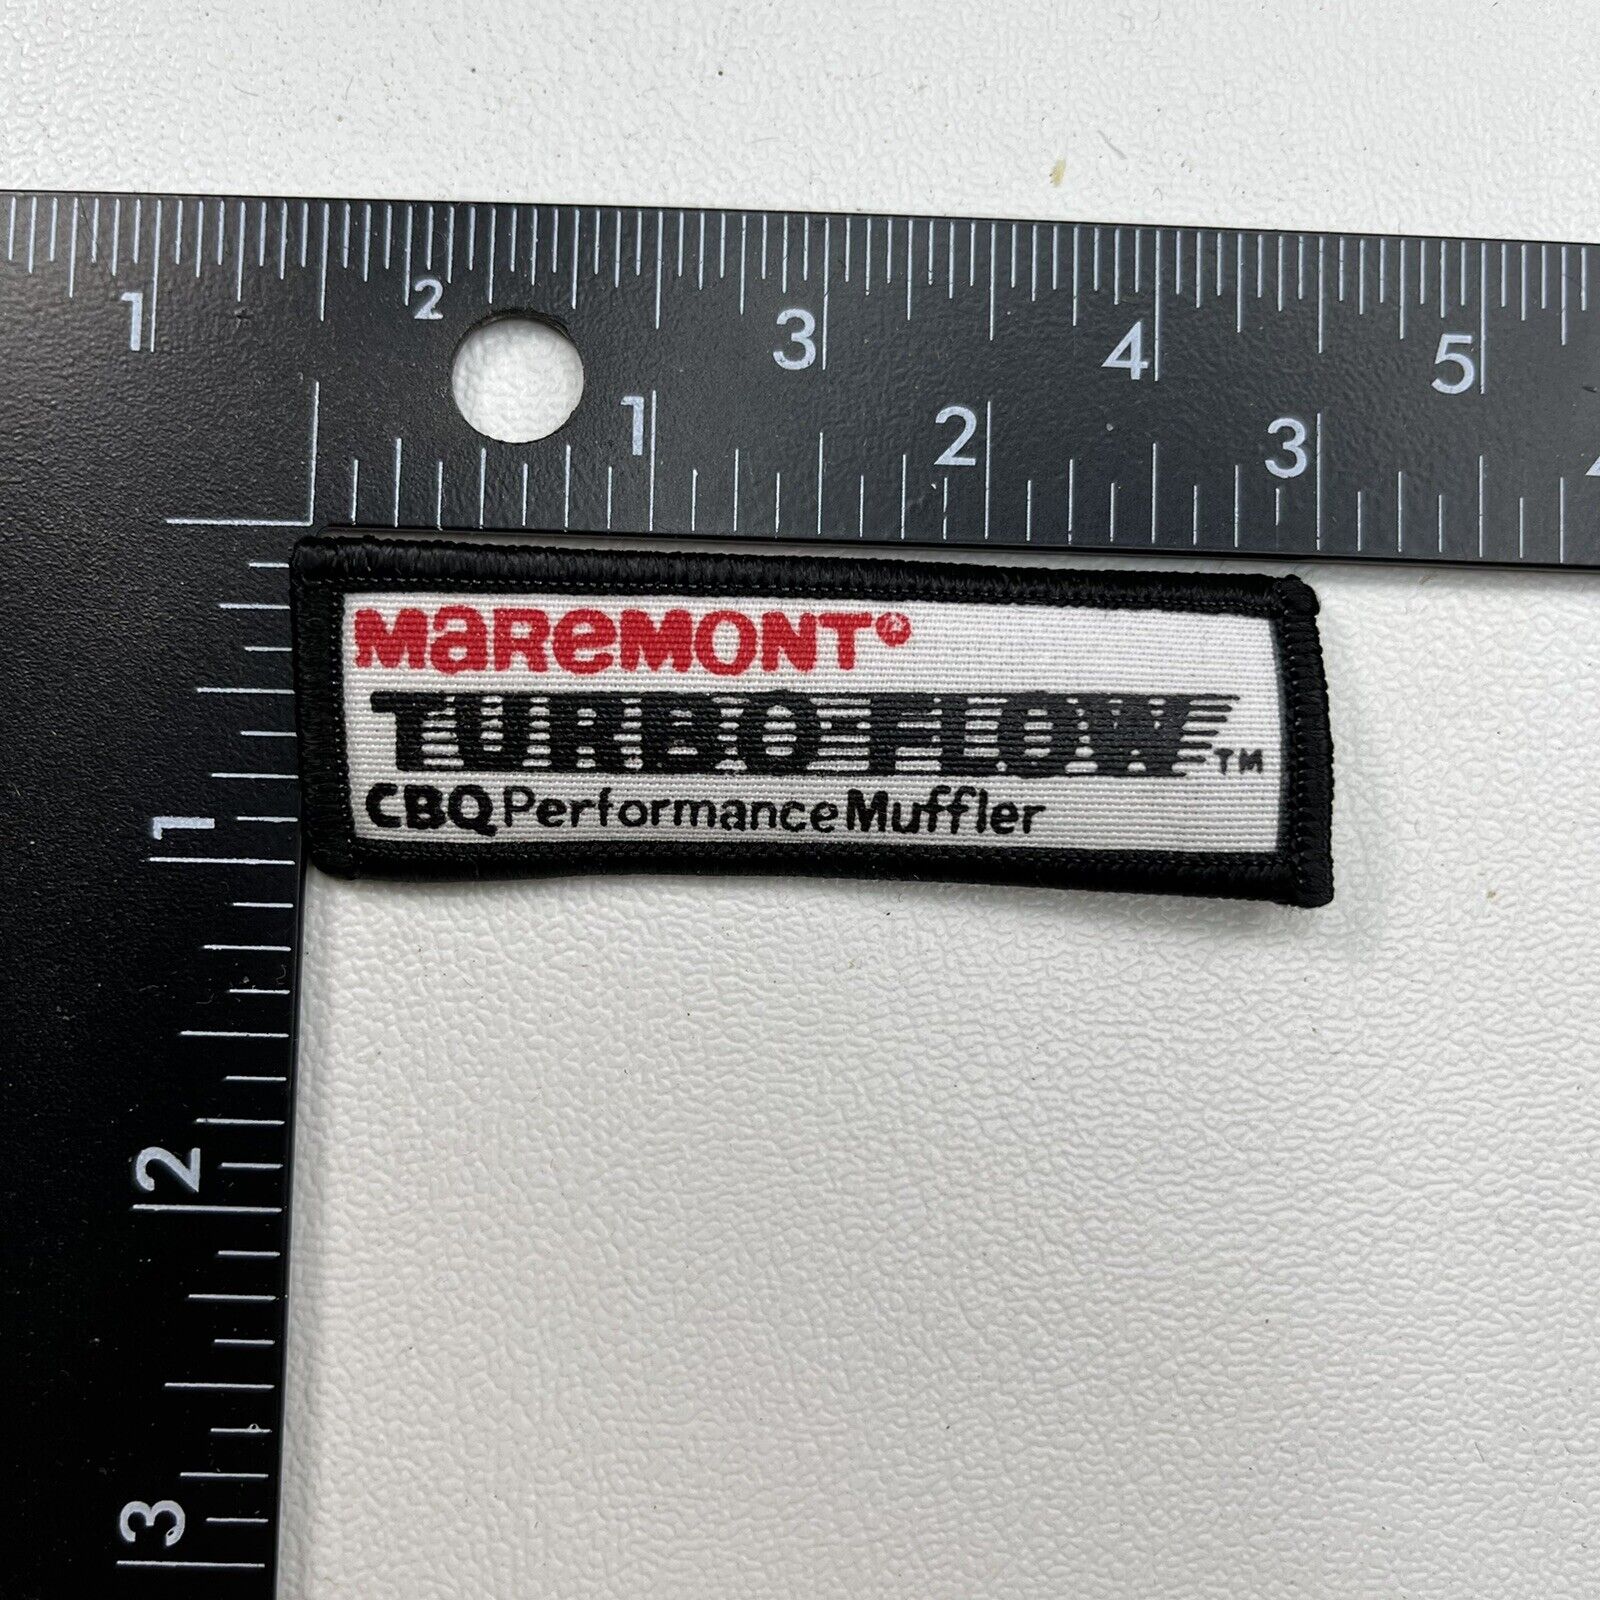 MAREMONT TURBO FLOW CBQ PERFORMANCE MUFFLER Patch C11F